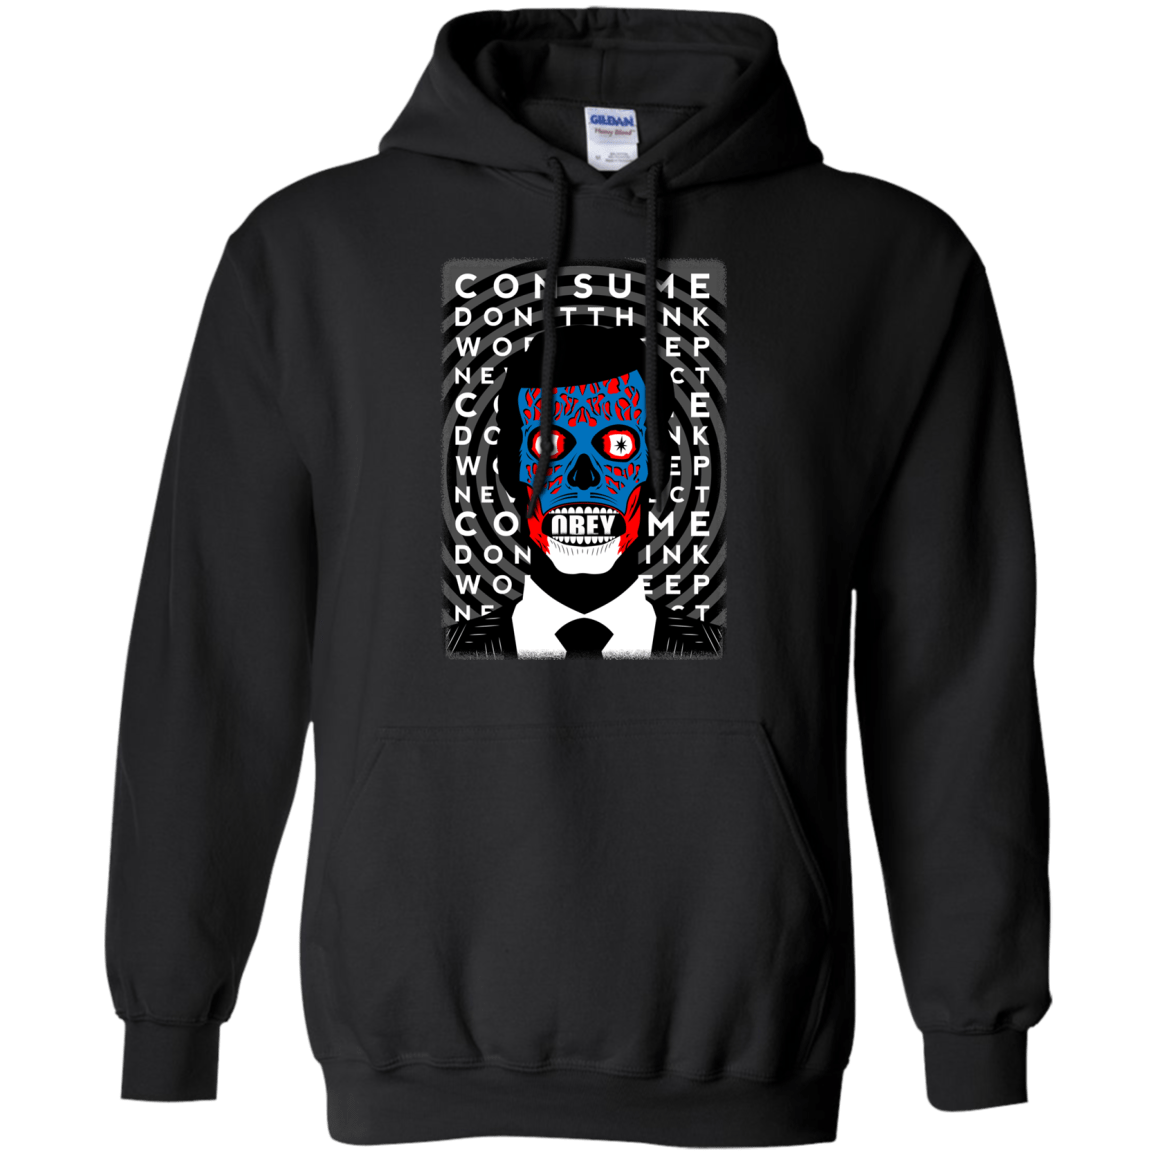 Sweatshirts Black / Small OBEY Pullover Hoodie